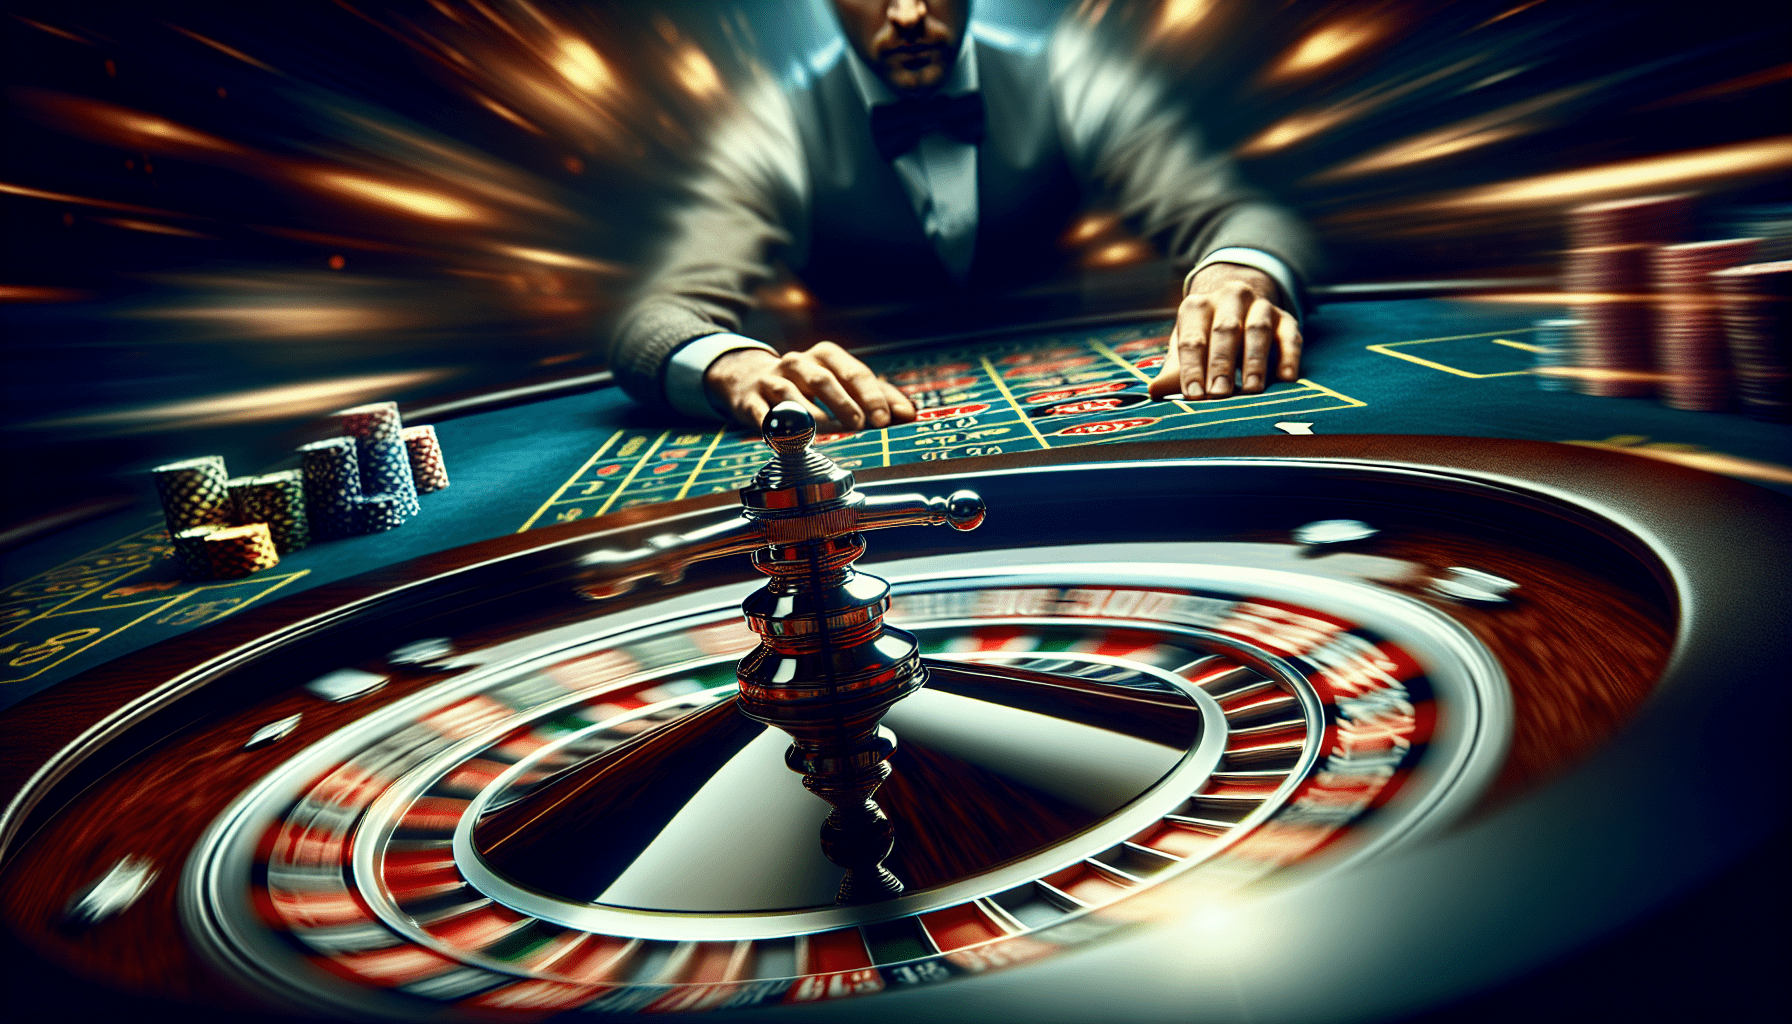 Can I Play Live Dealer Games At Online Casinos?